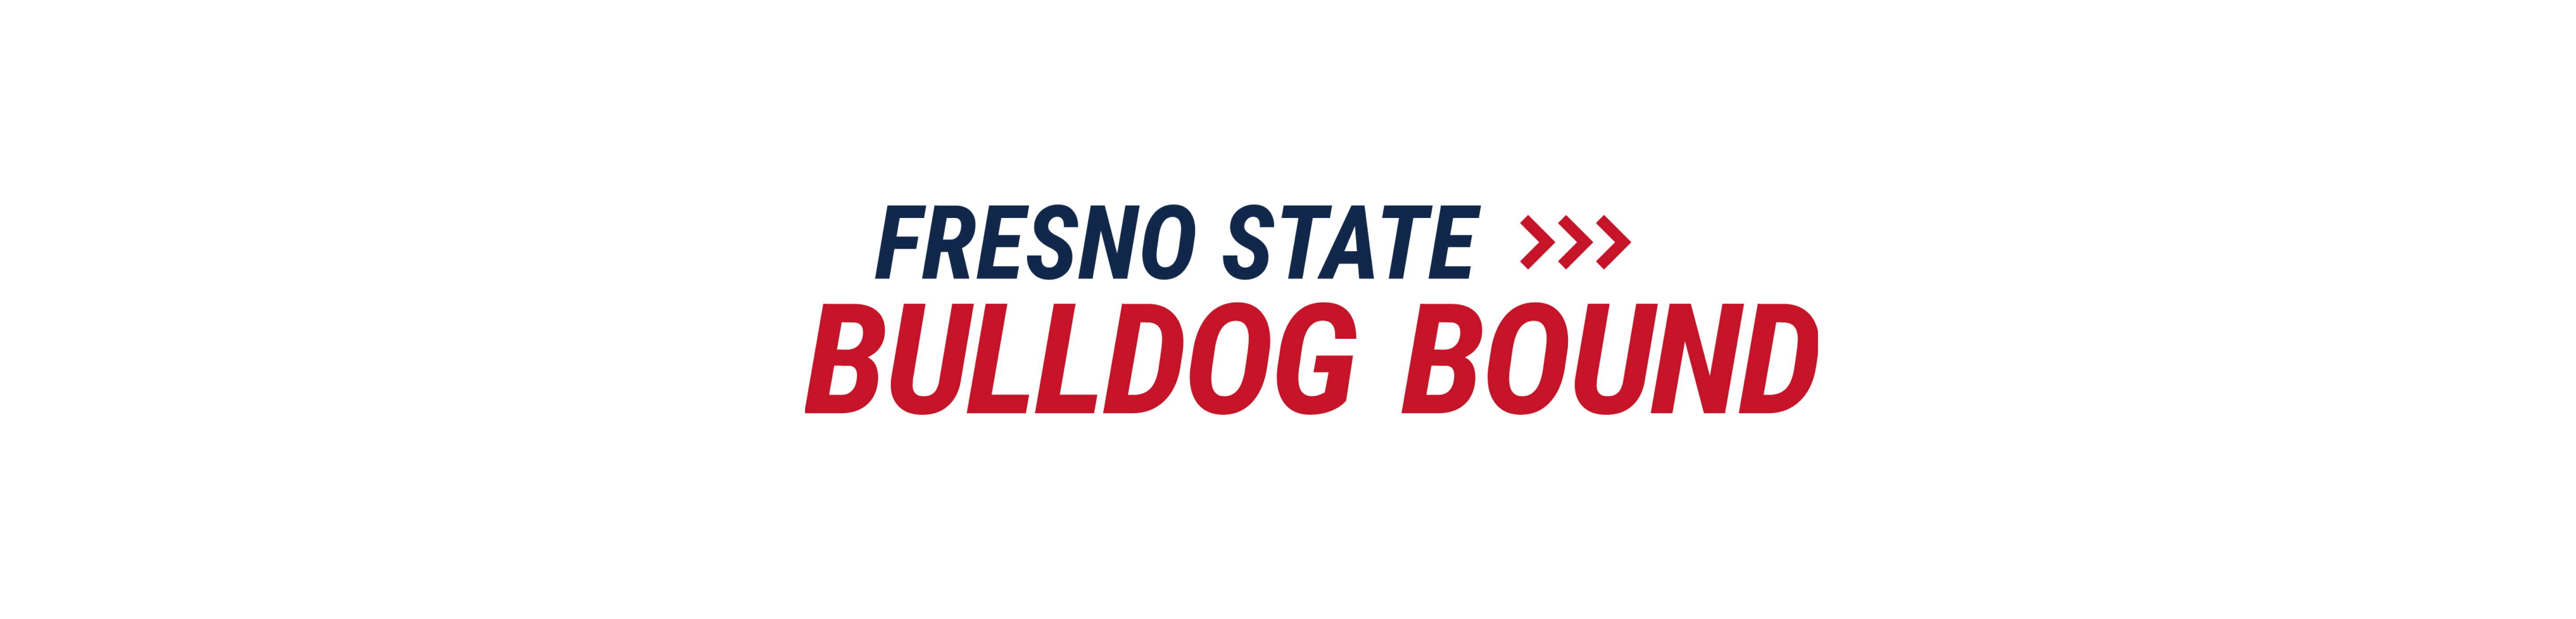 Fresno State Bulldog Bound - Graphic Text